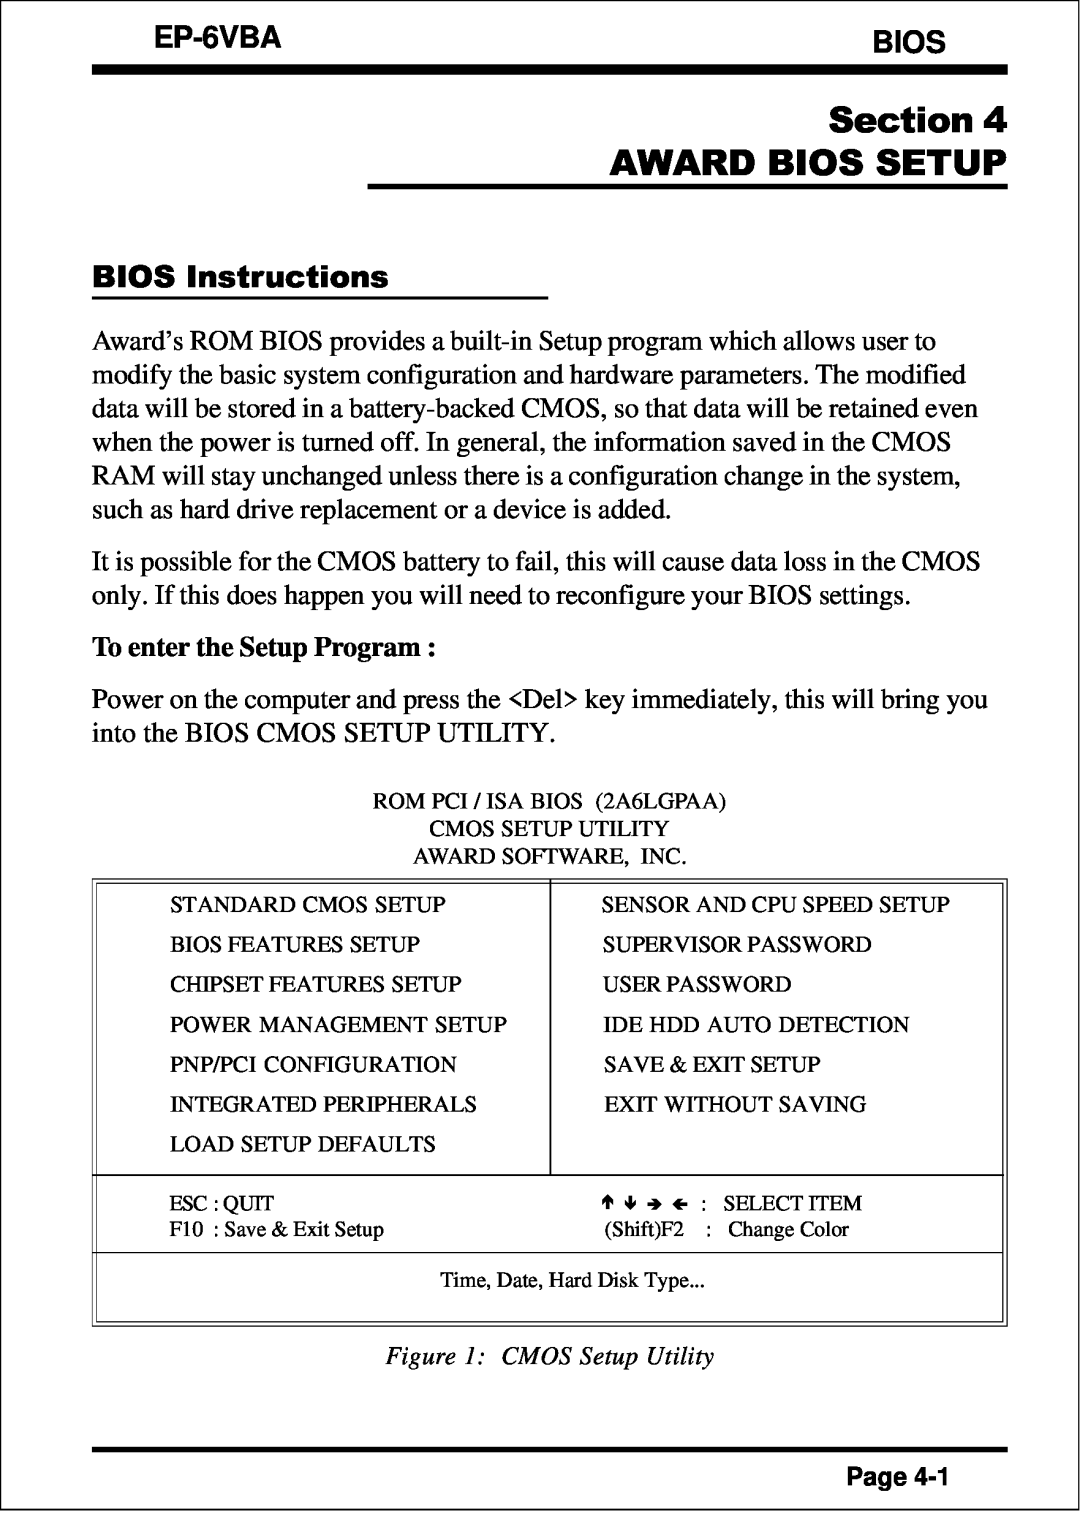 EPoX Computer EP-6VBA specifications Section AWARD BIOS SETUP, Bios, BIOS Instructions, To enter the Setup Program 